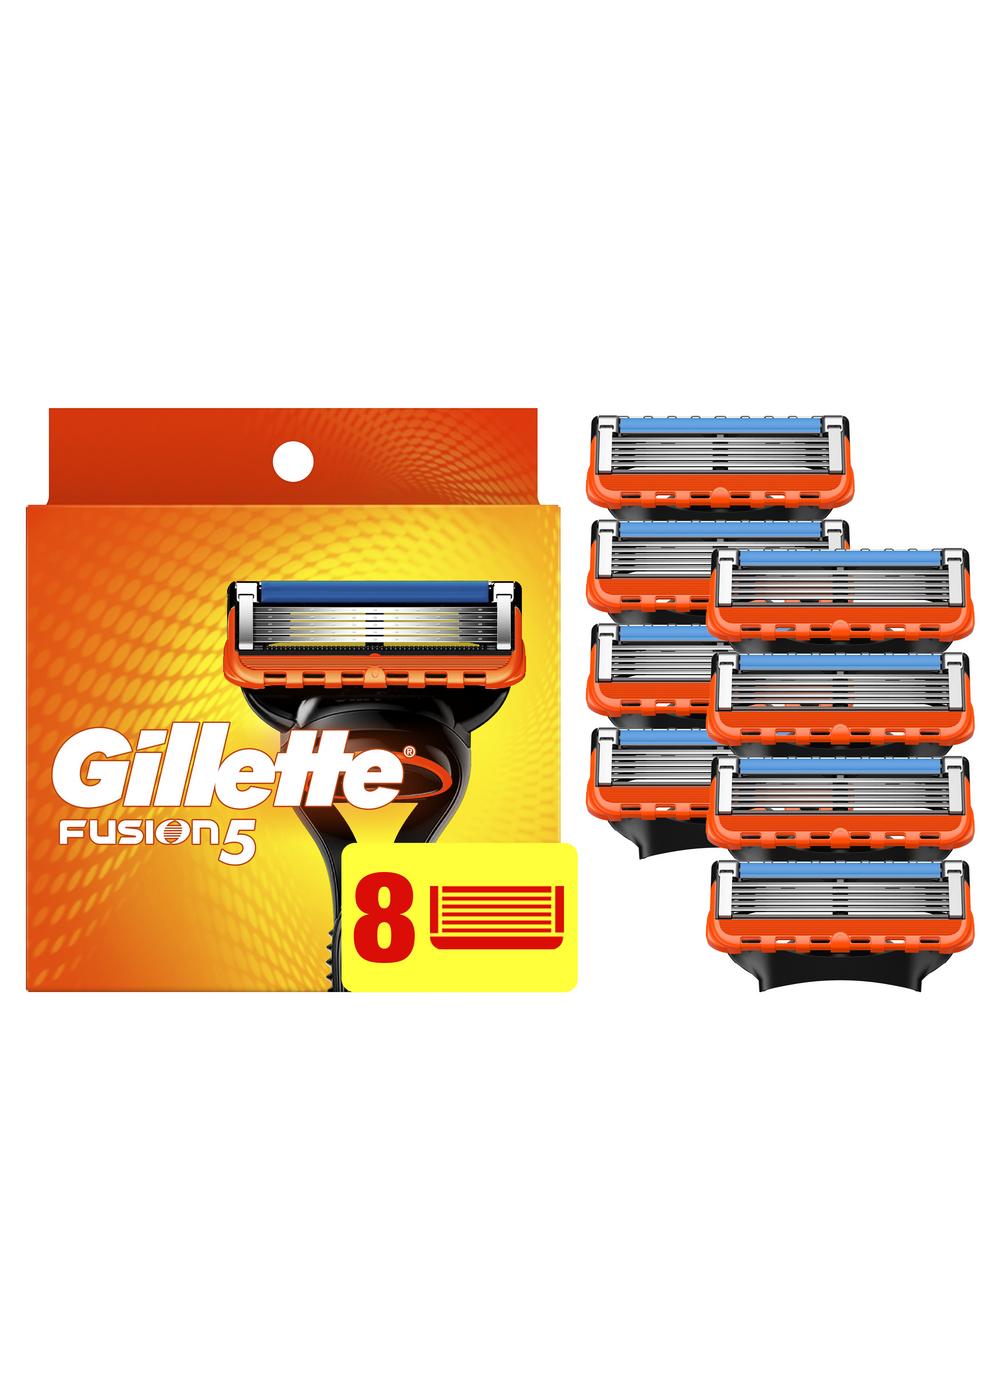 Gillette Fusion5 Razor Blade Refills; image 9 of 11